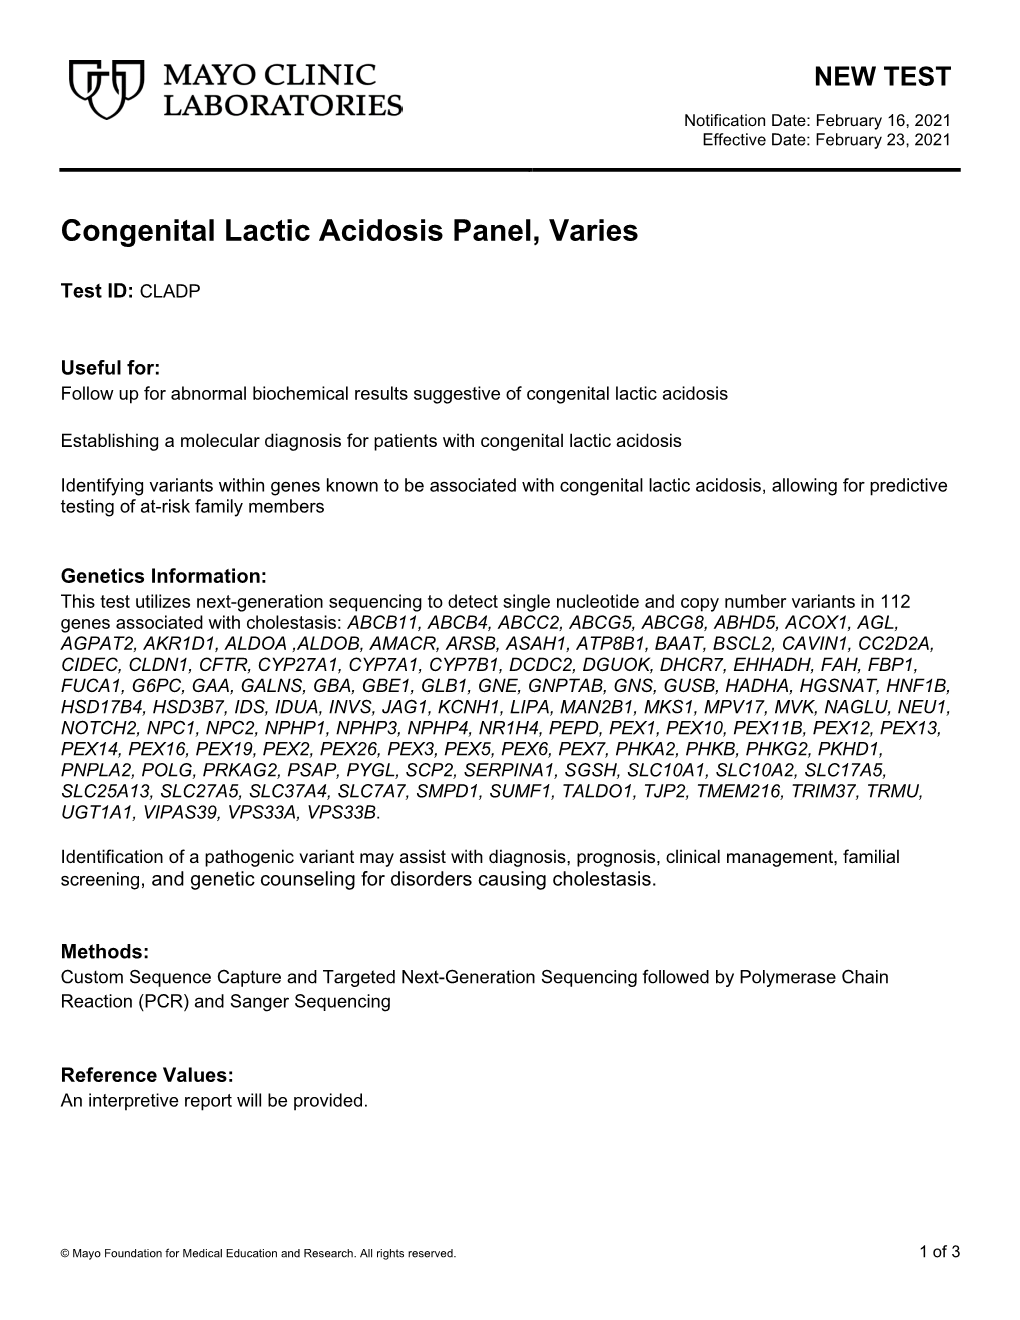 Congenital Lactic Acidosis Panel, Varies